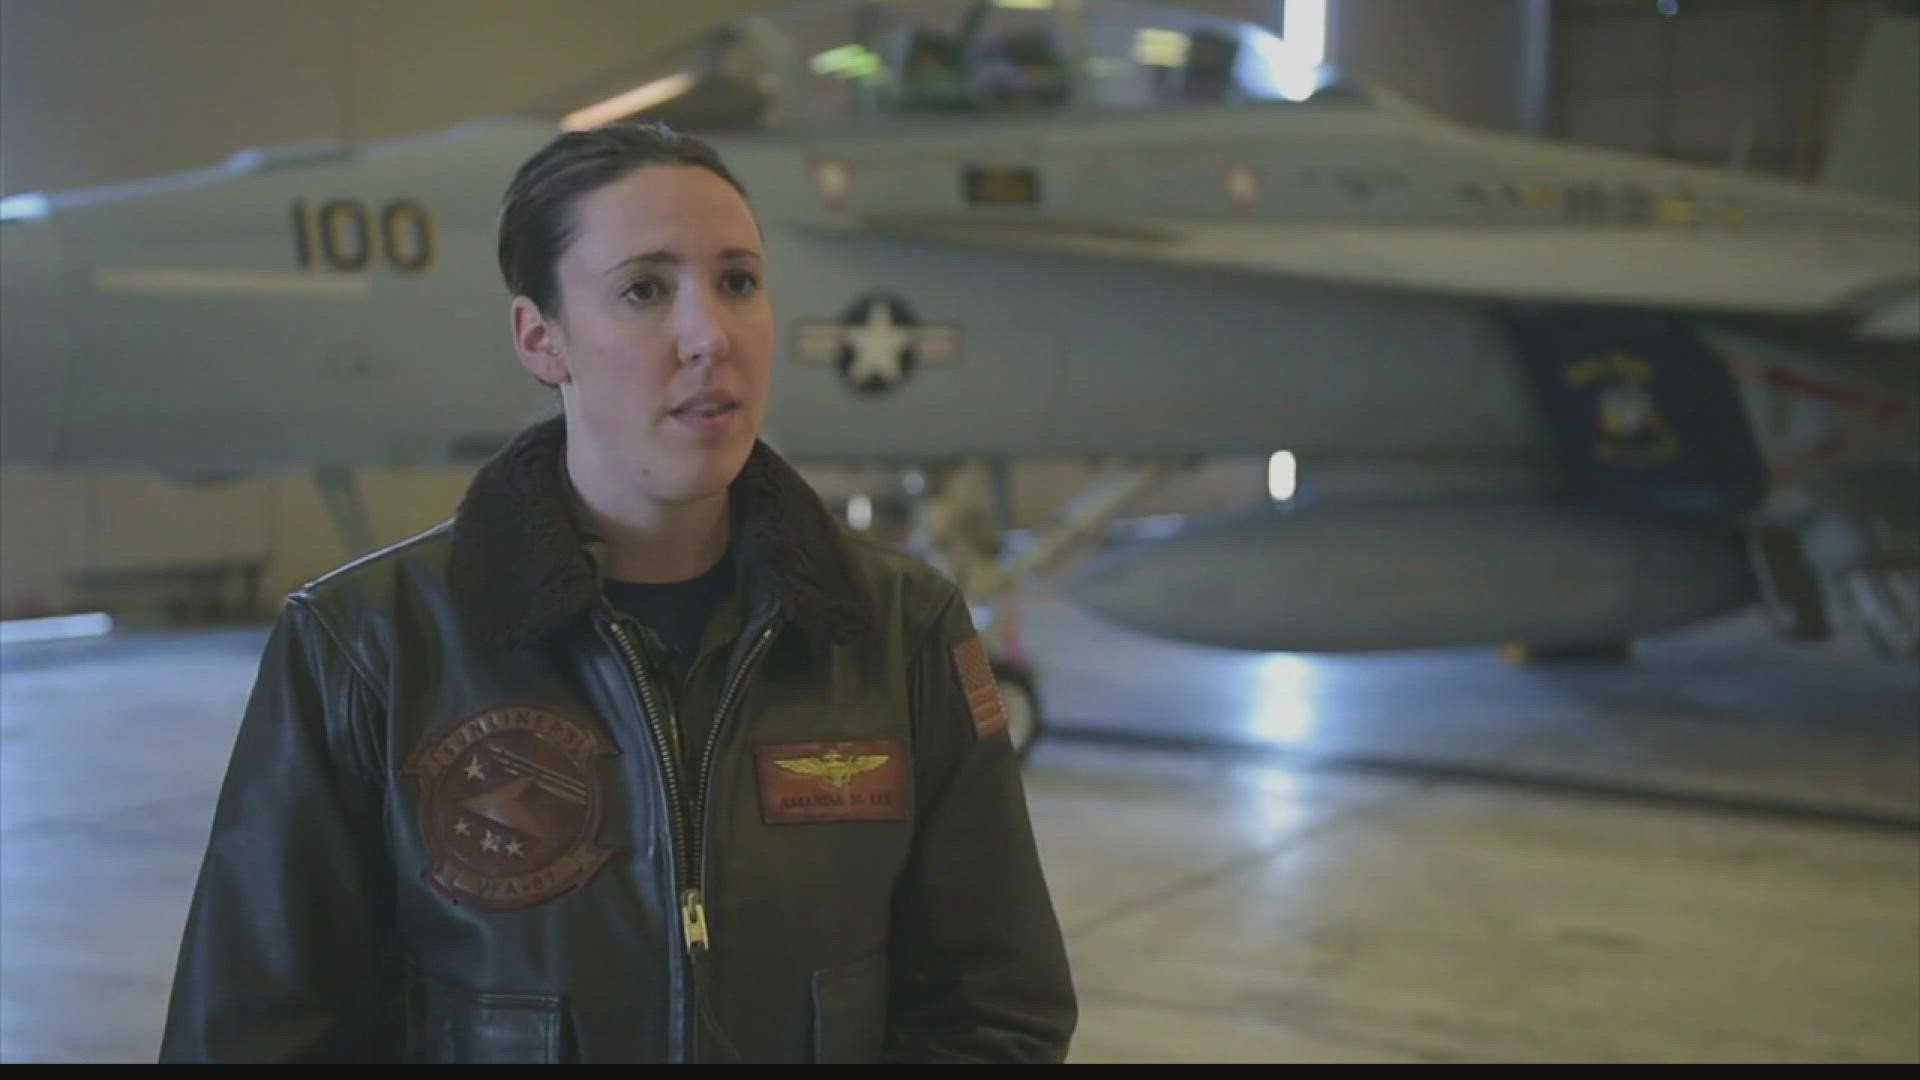 Navy Lieutenant Amanda Lee is an inspiration.